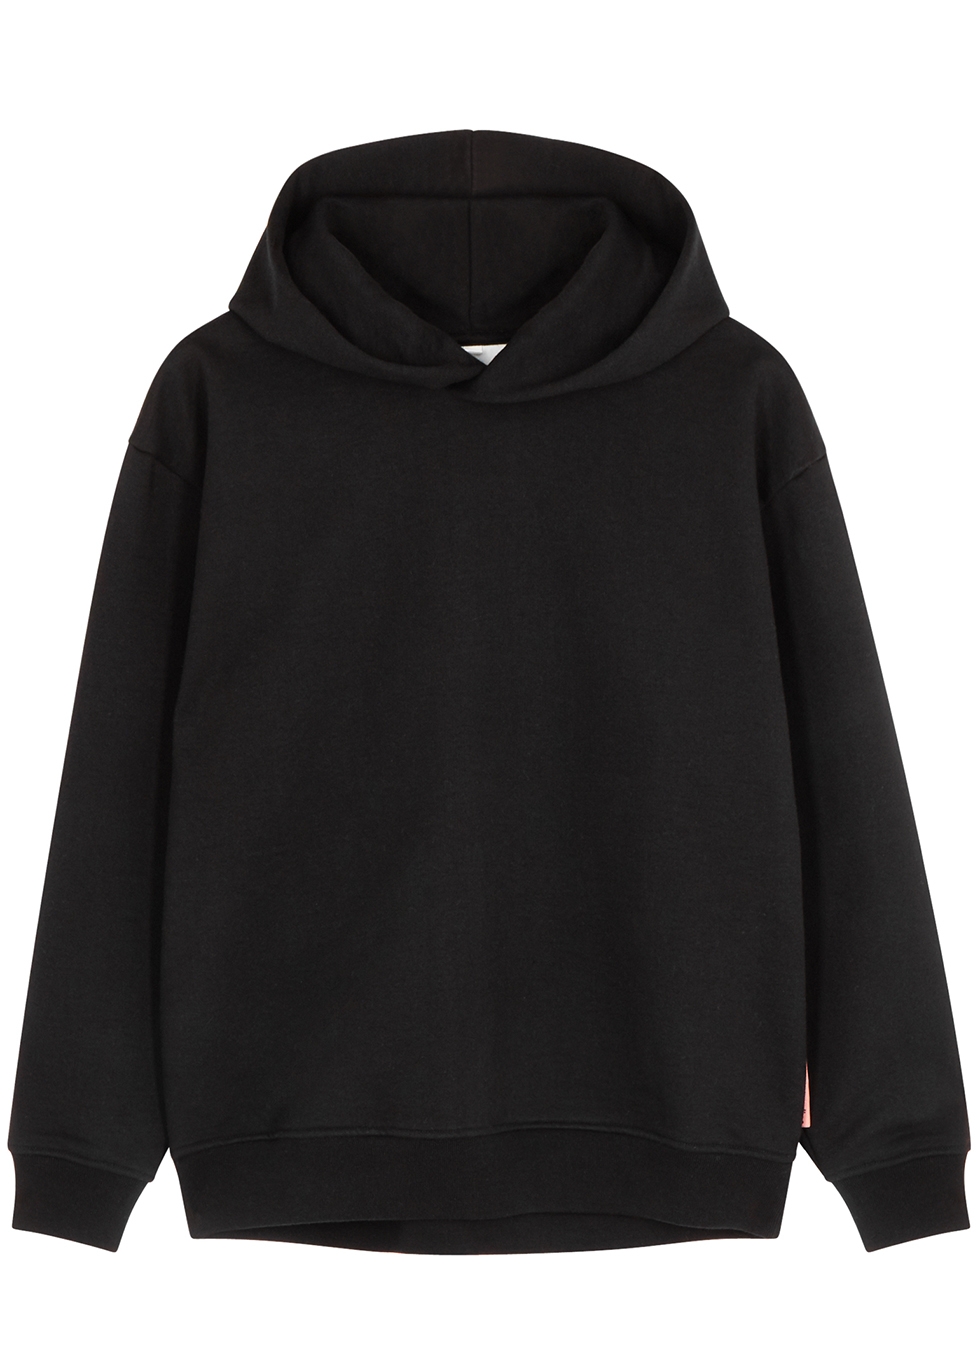 Black hooded cotton-blend sweatshirt